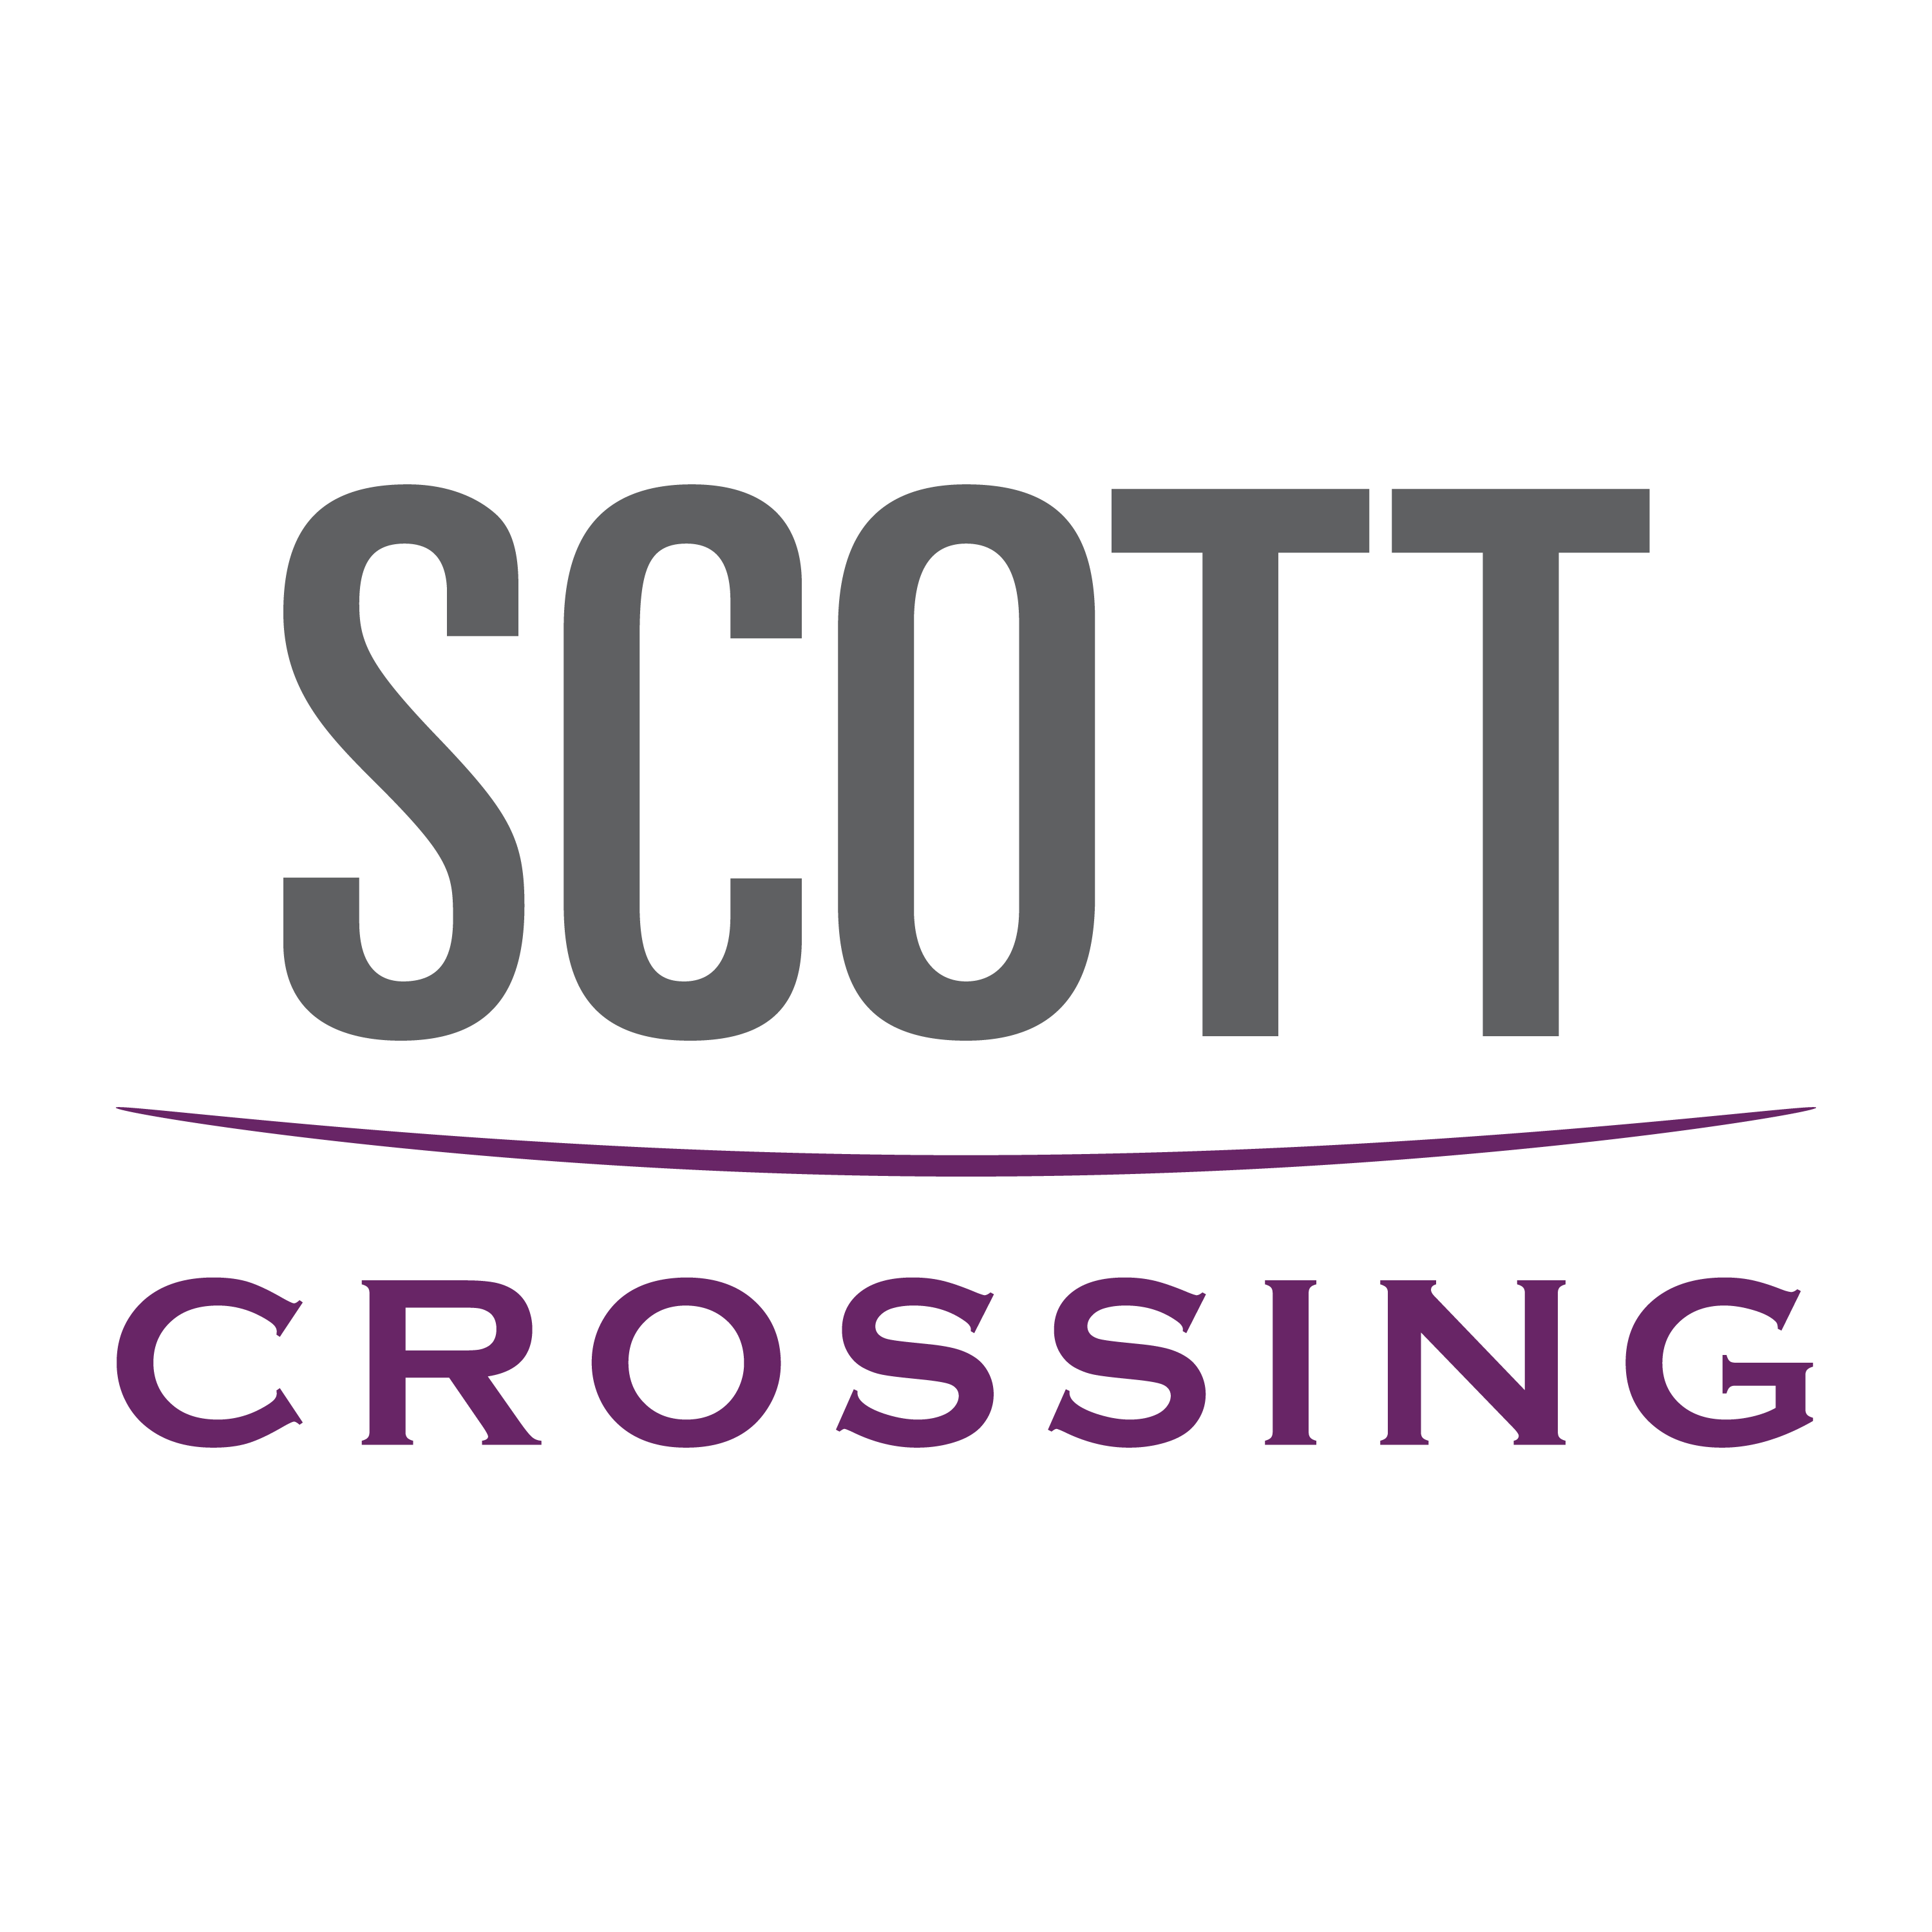 Scott Crossing